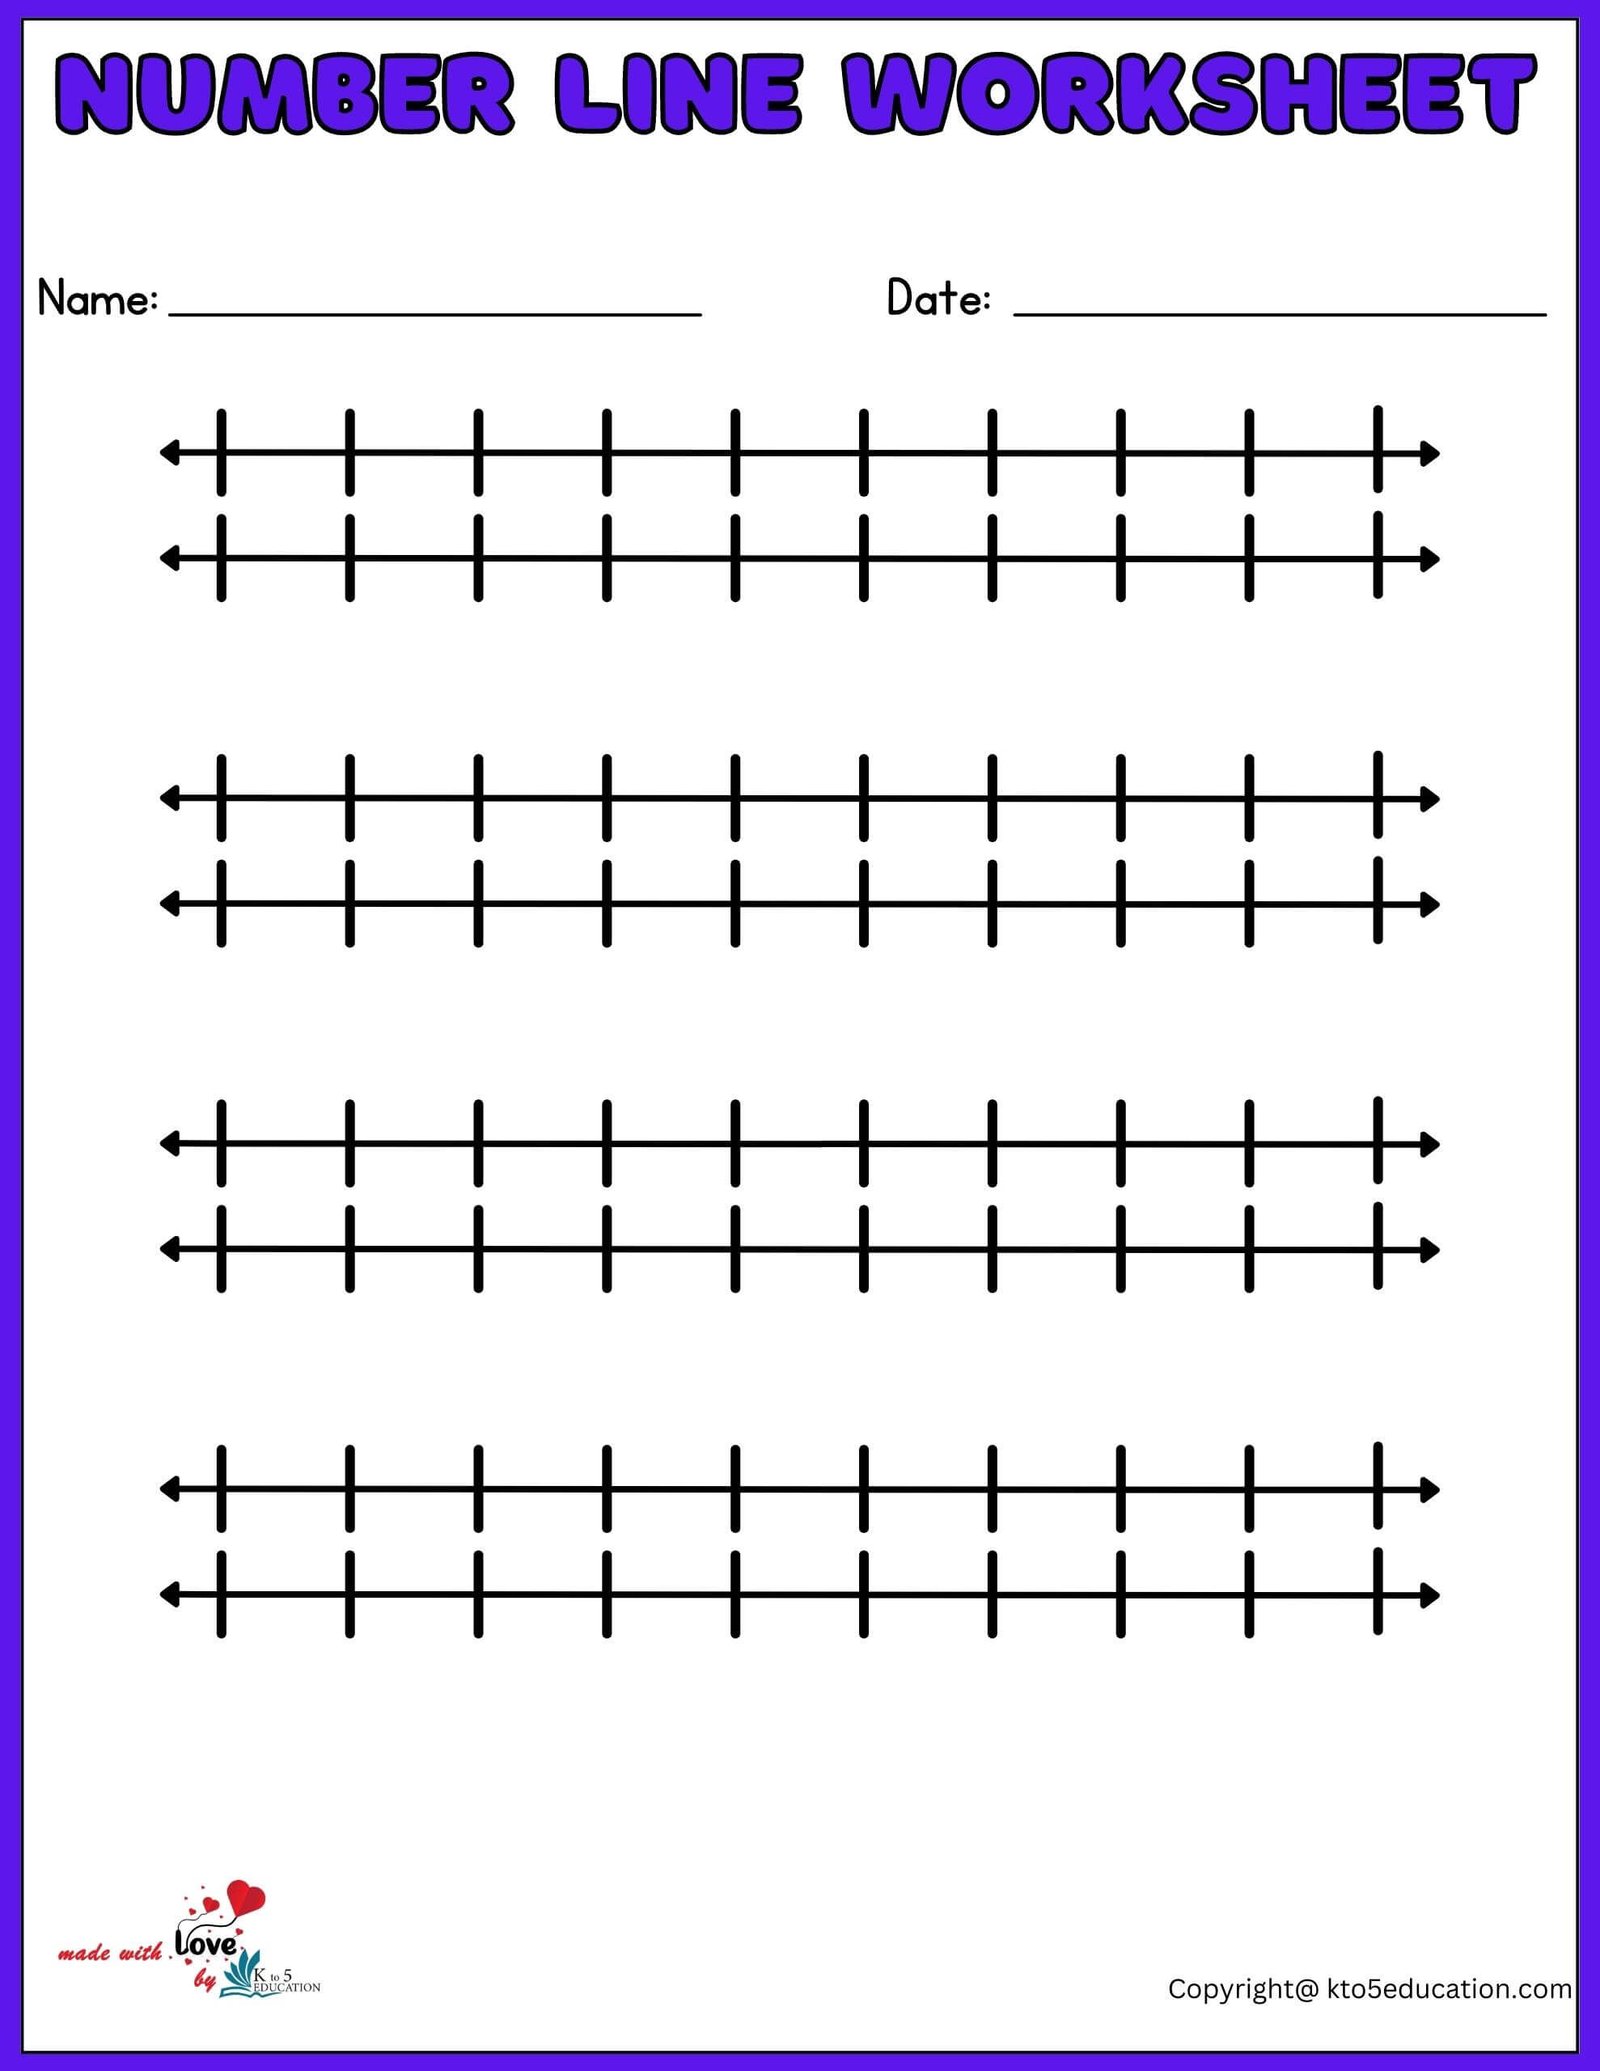 Double Number Line Worksheet 1-10